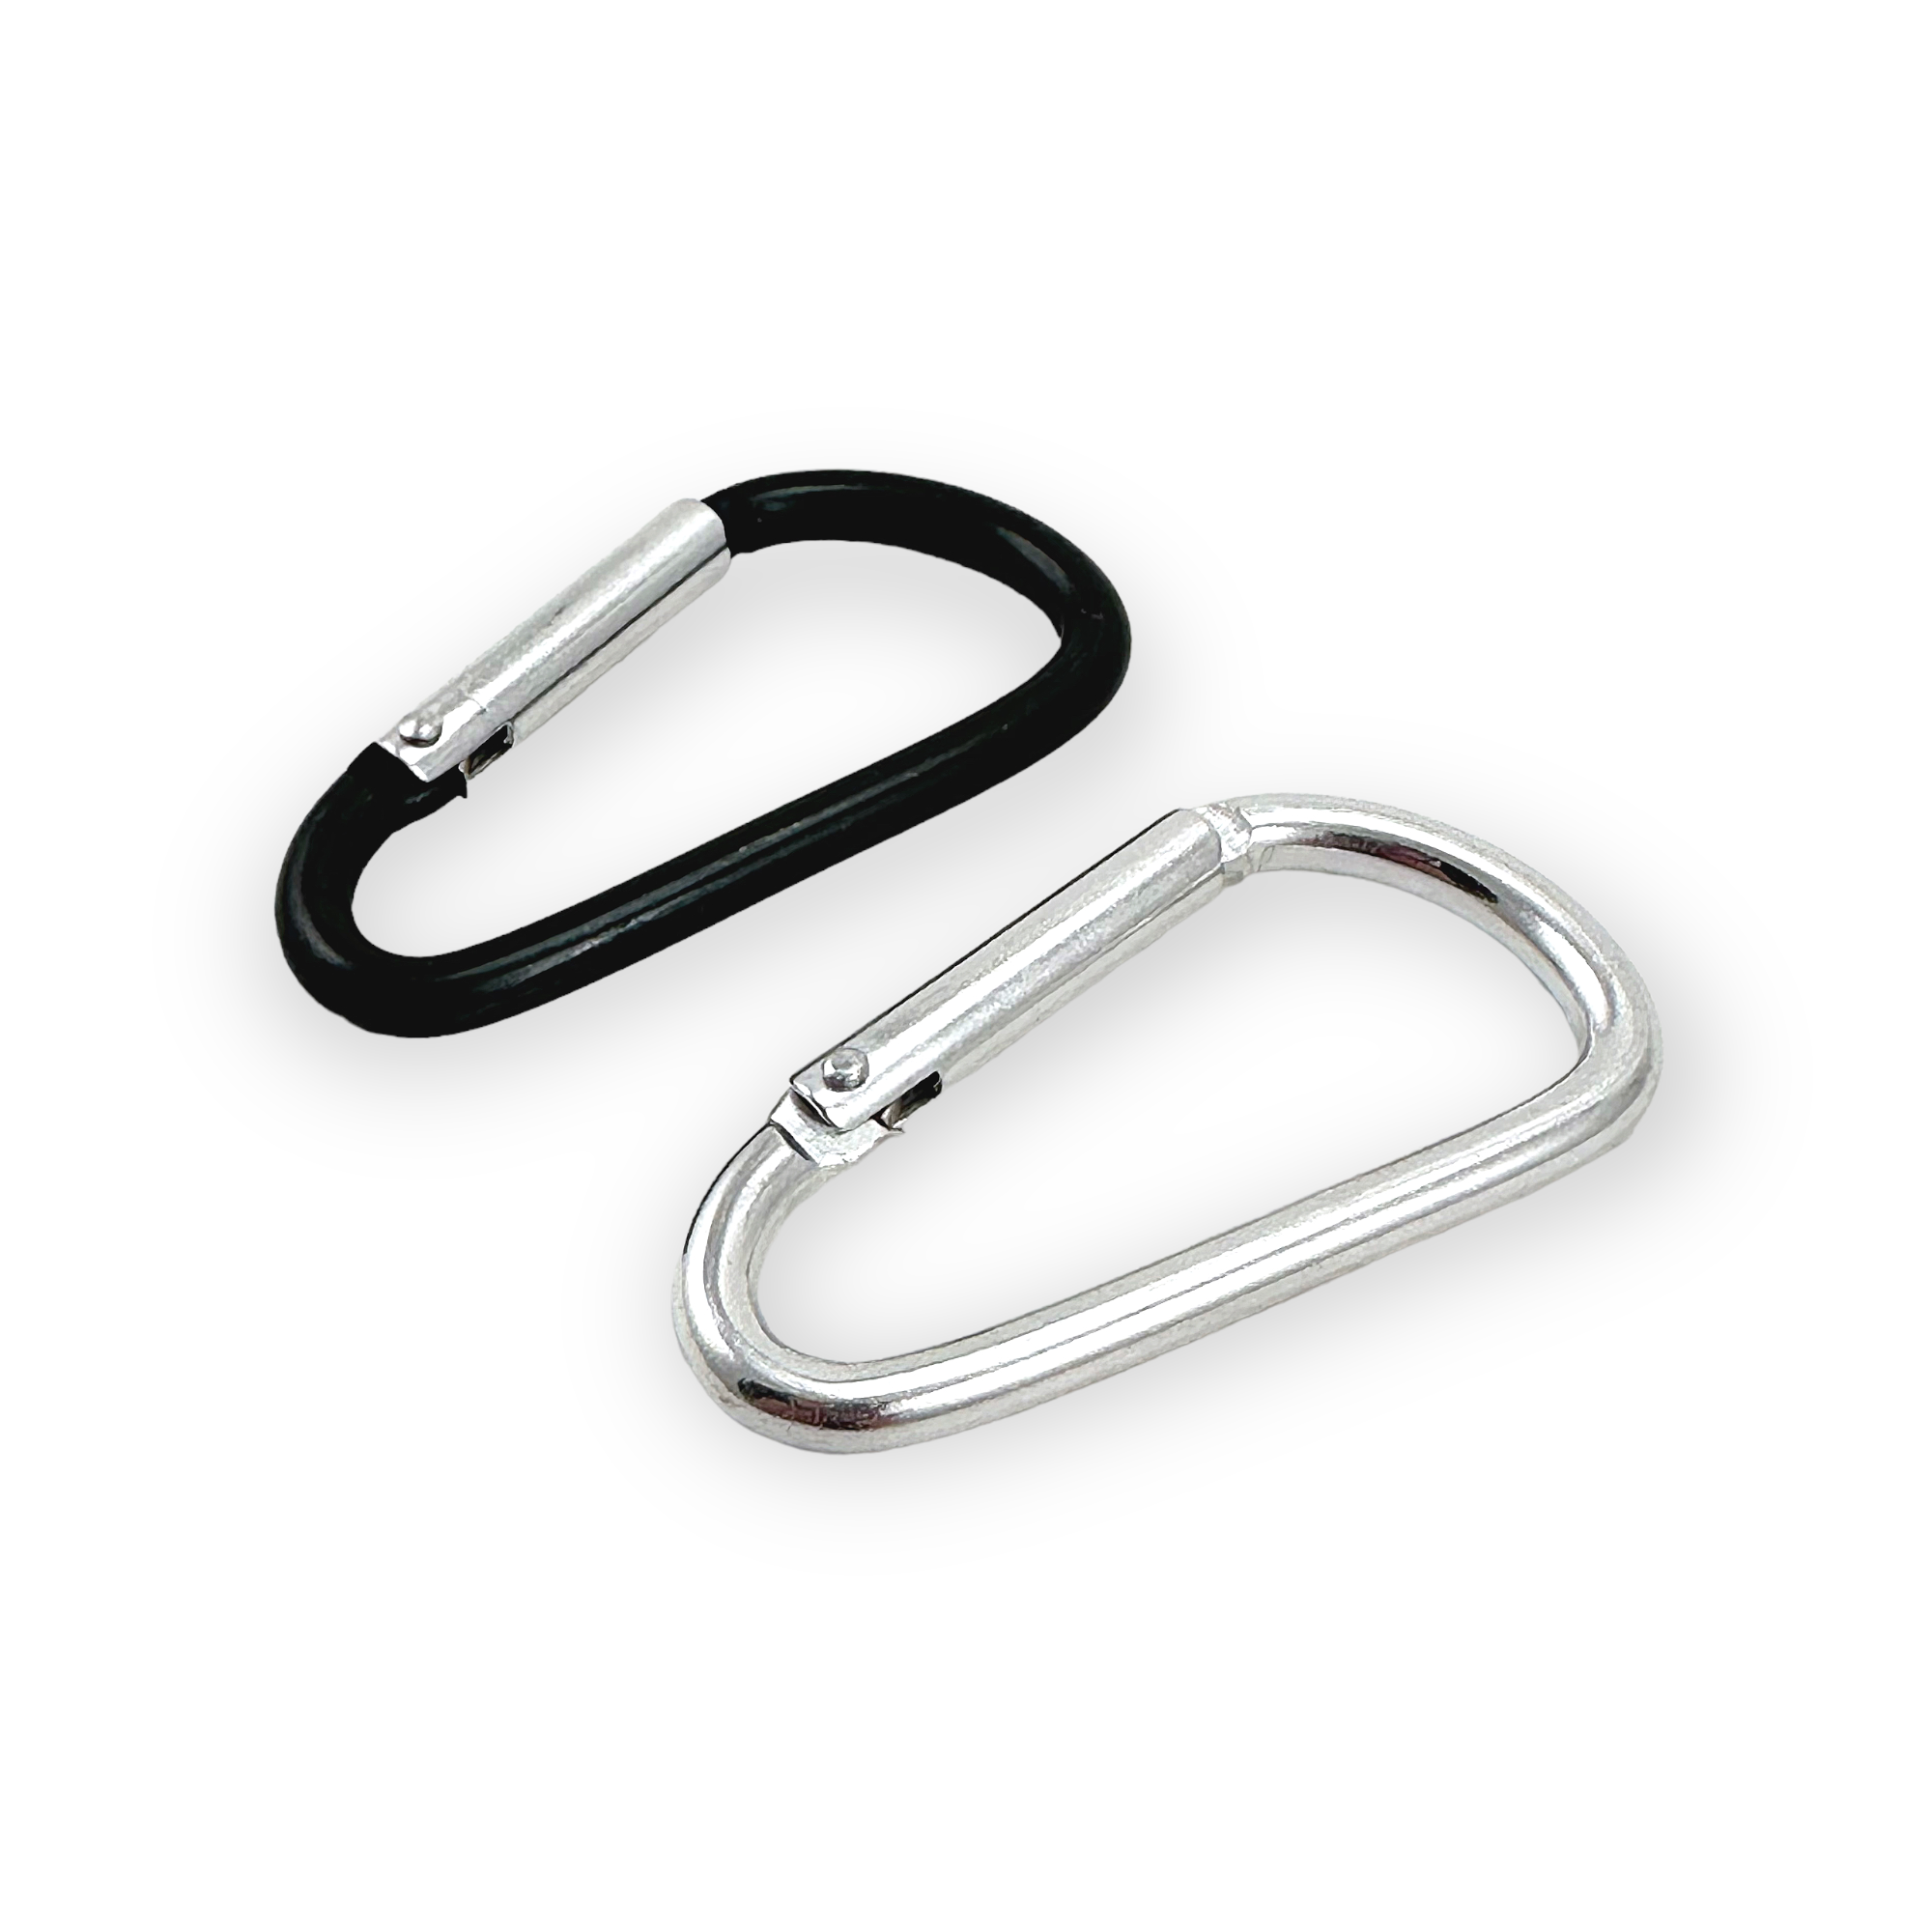 ▷ Carabiner - Snaps Hook Buckles - D-ring Carabiners 4.5 cm